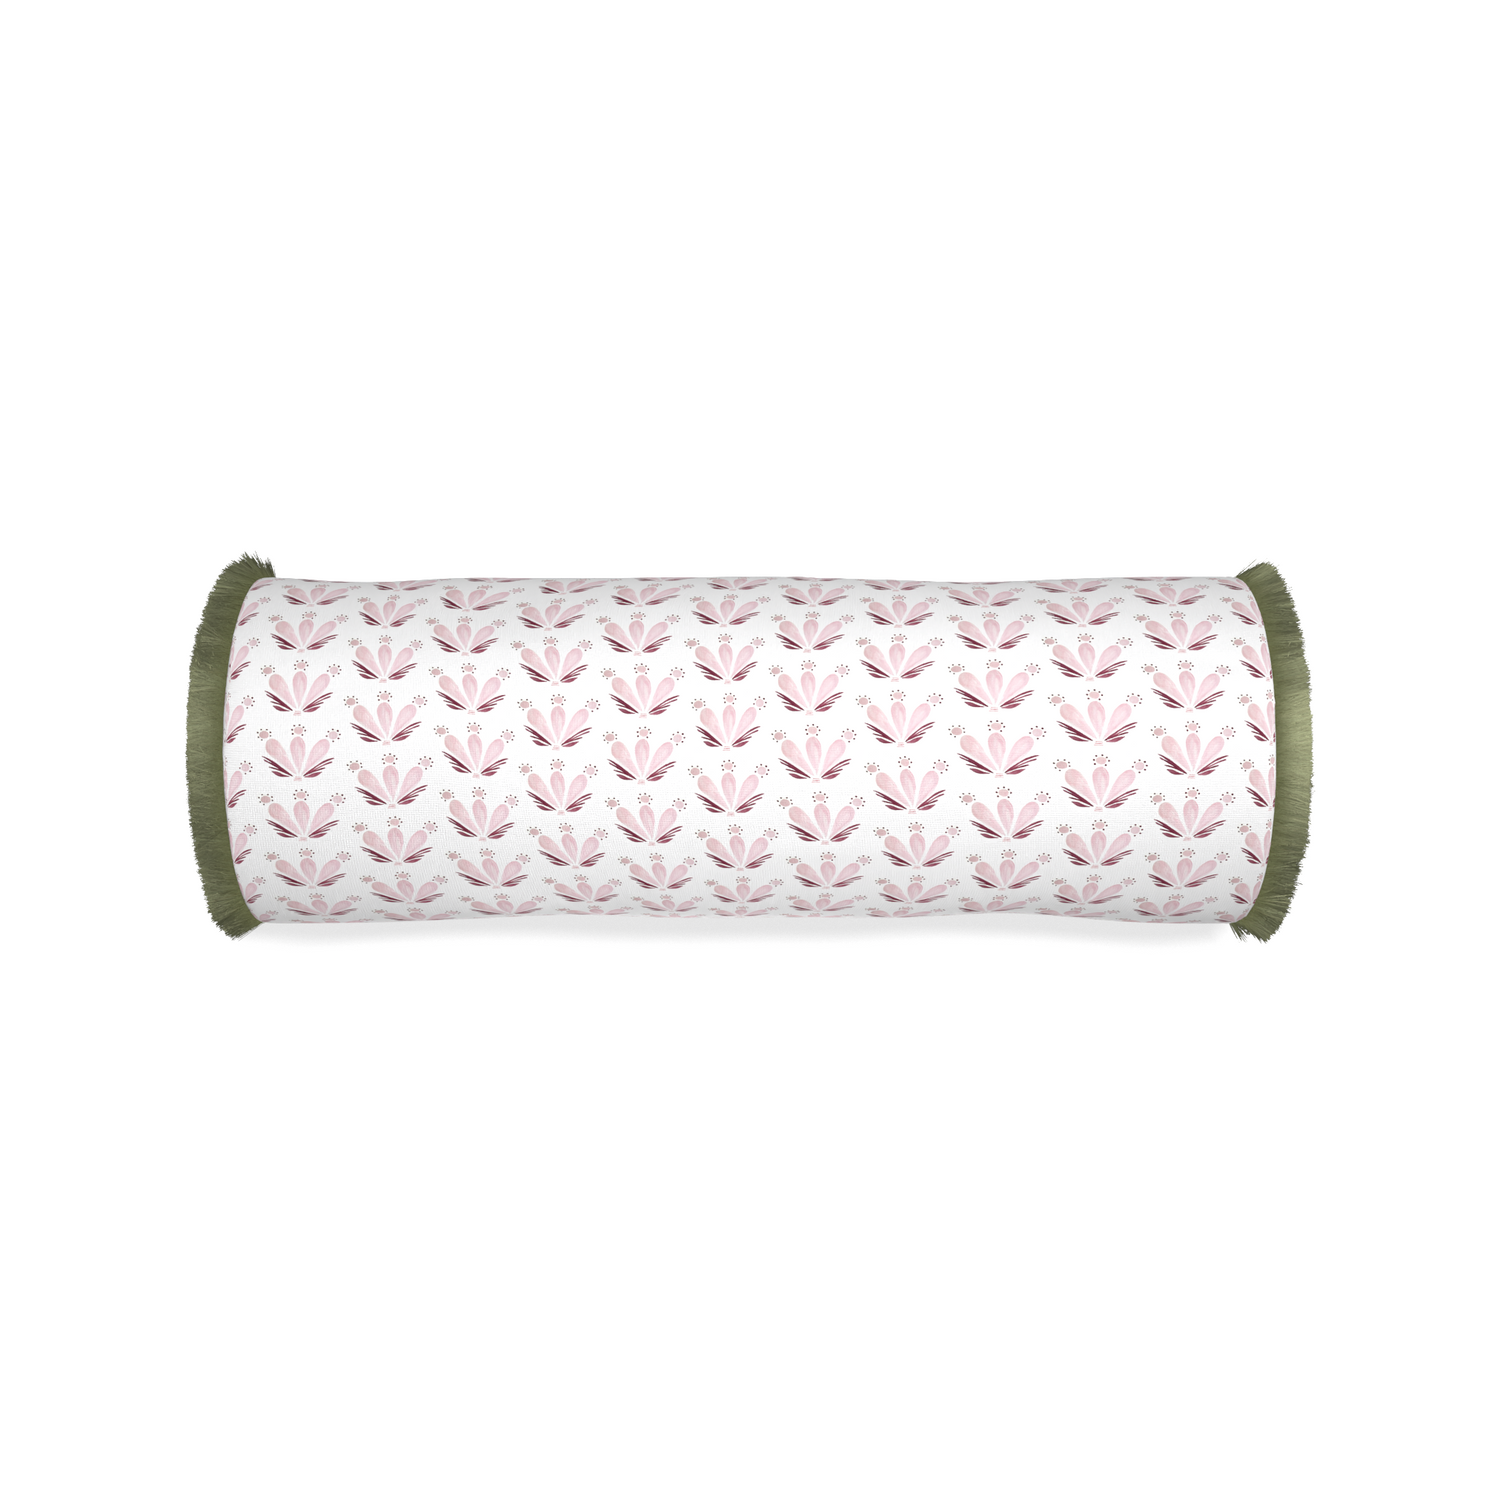 Bolster serena pink custom pillow with sage fringe on white background